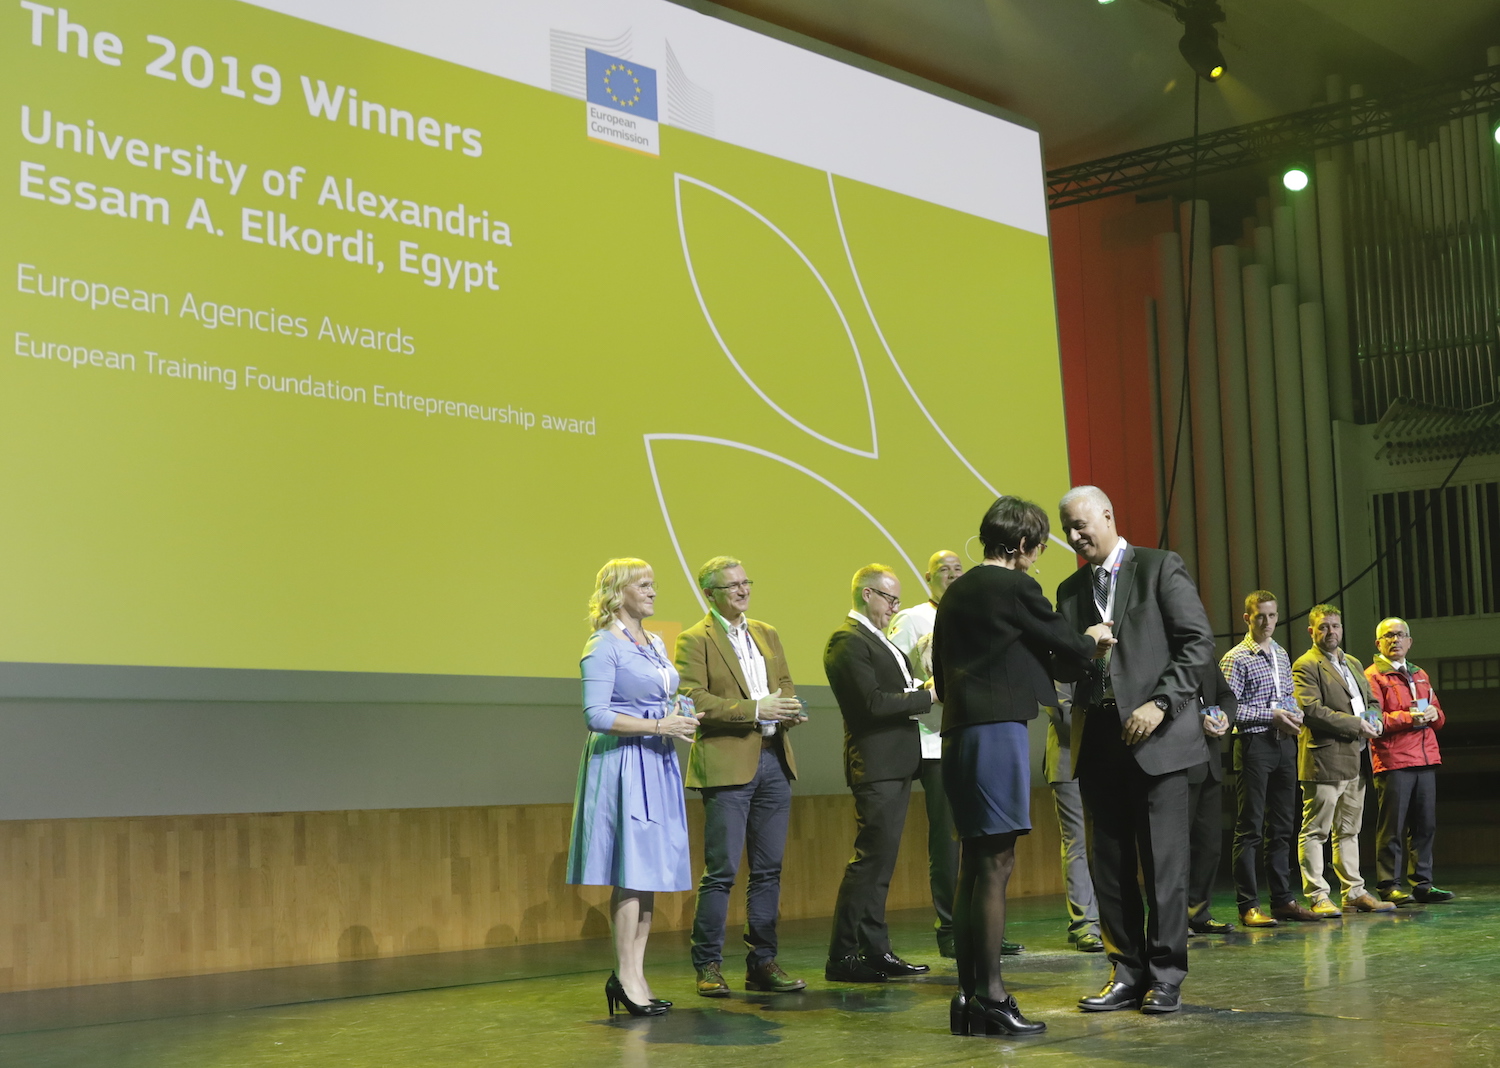 European Training Foundation (ETF) Entrepreneurship Award